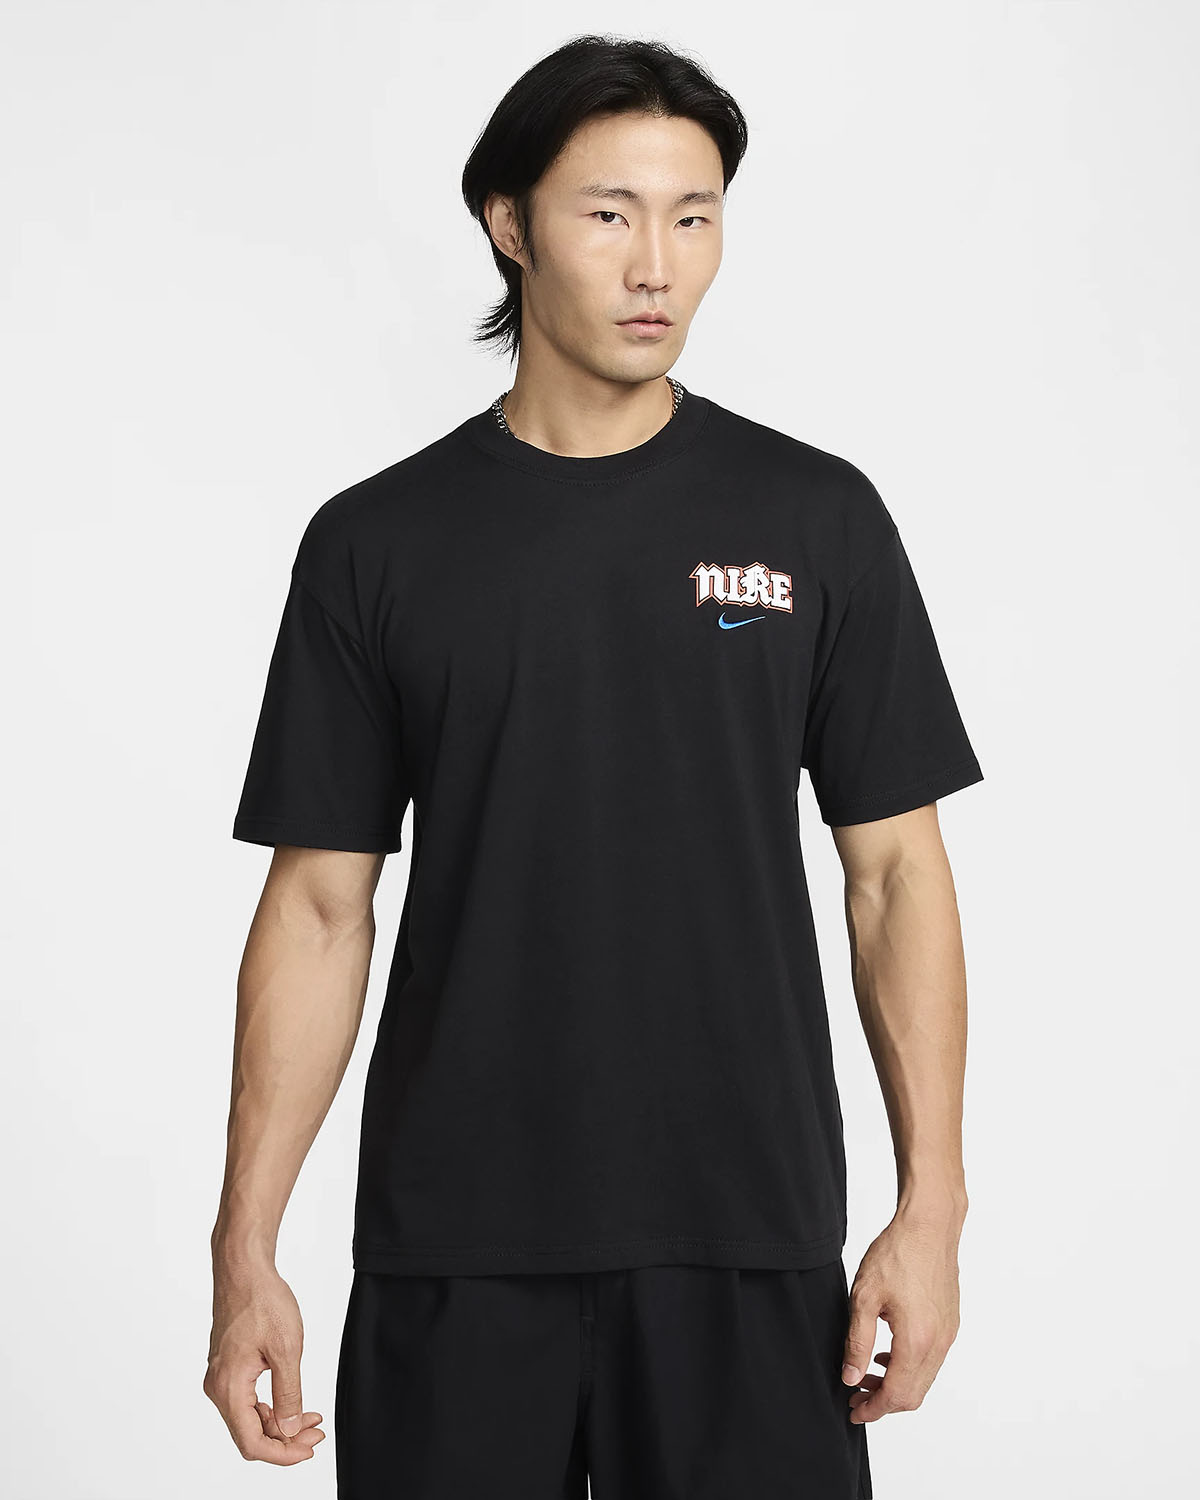 Nike Sportswear T Shirt Black White Dusty Cactus Orange 1